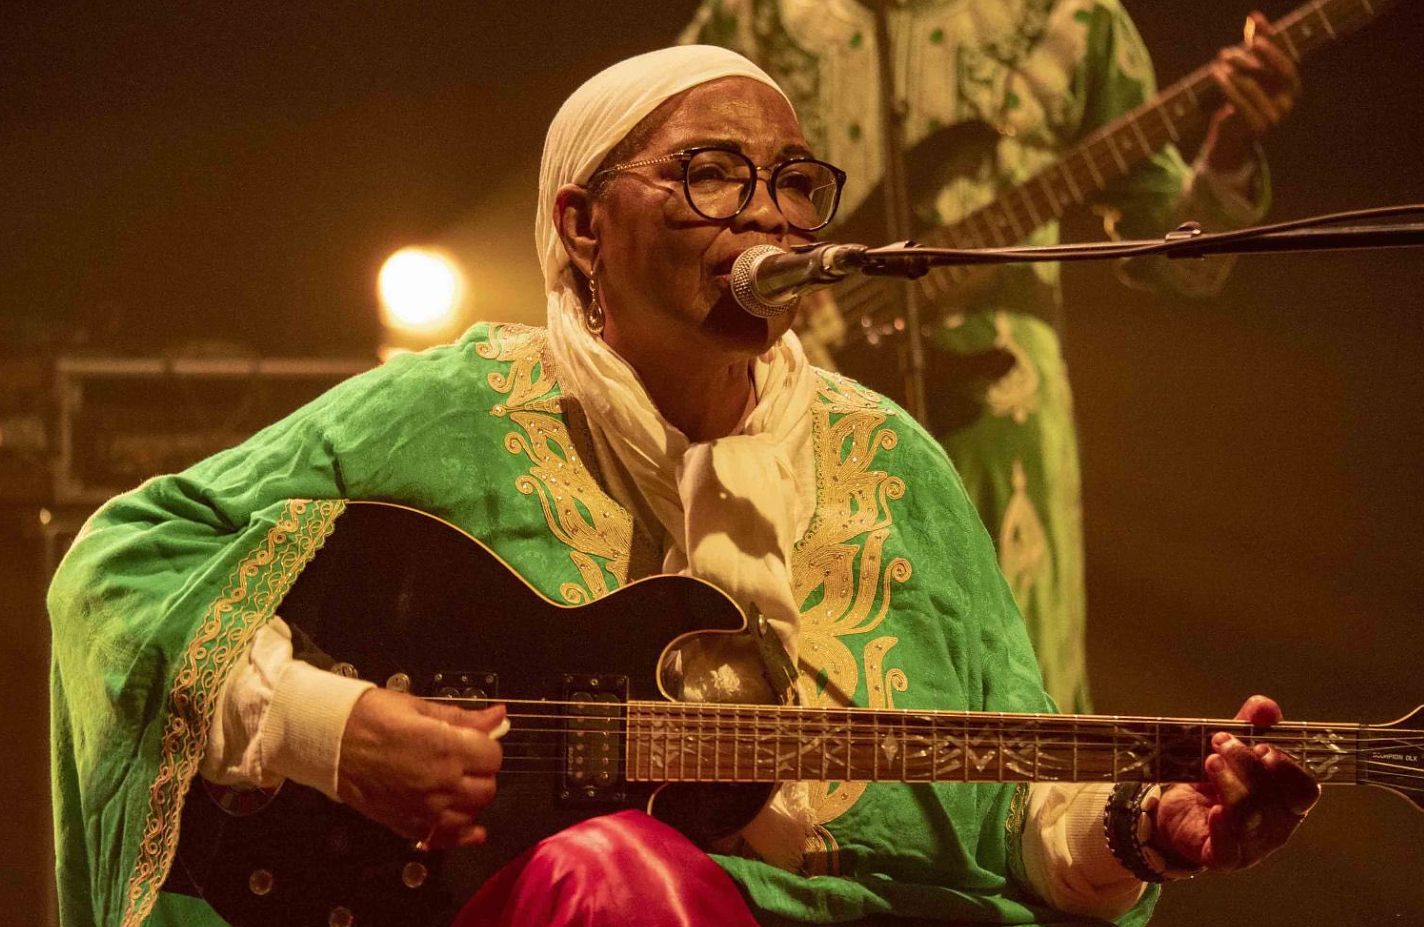 Hasna El Becharia, the Algerian “desert rocker”, has died